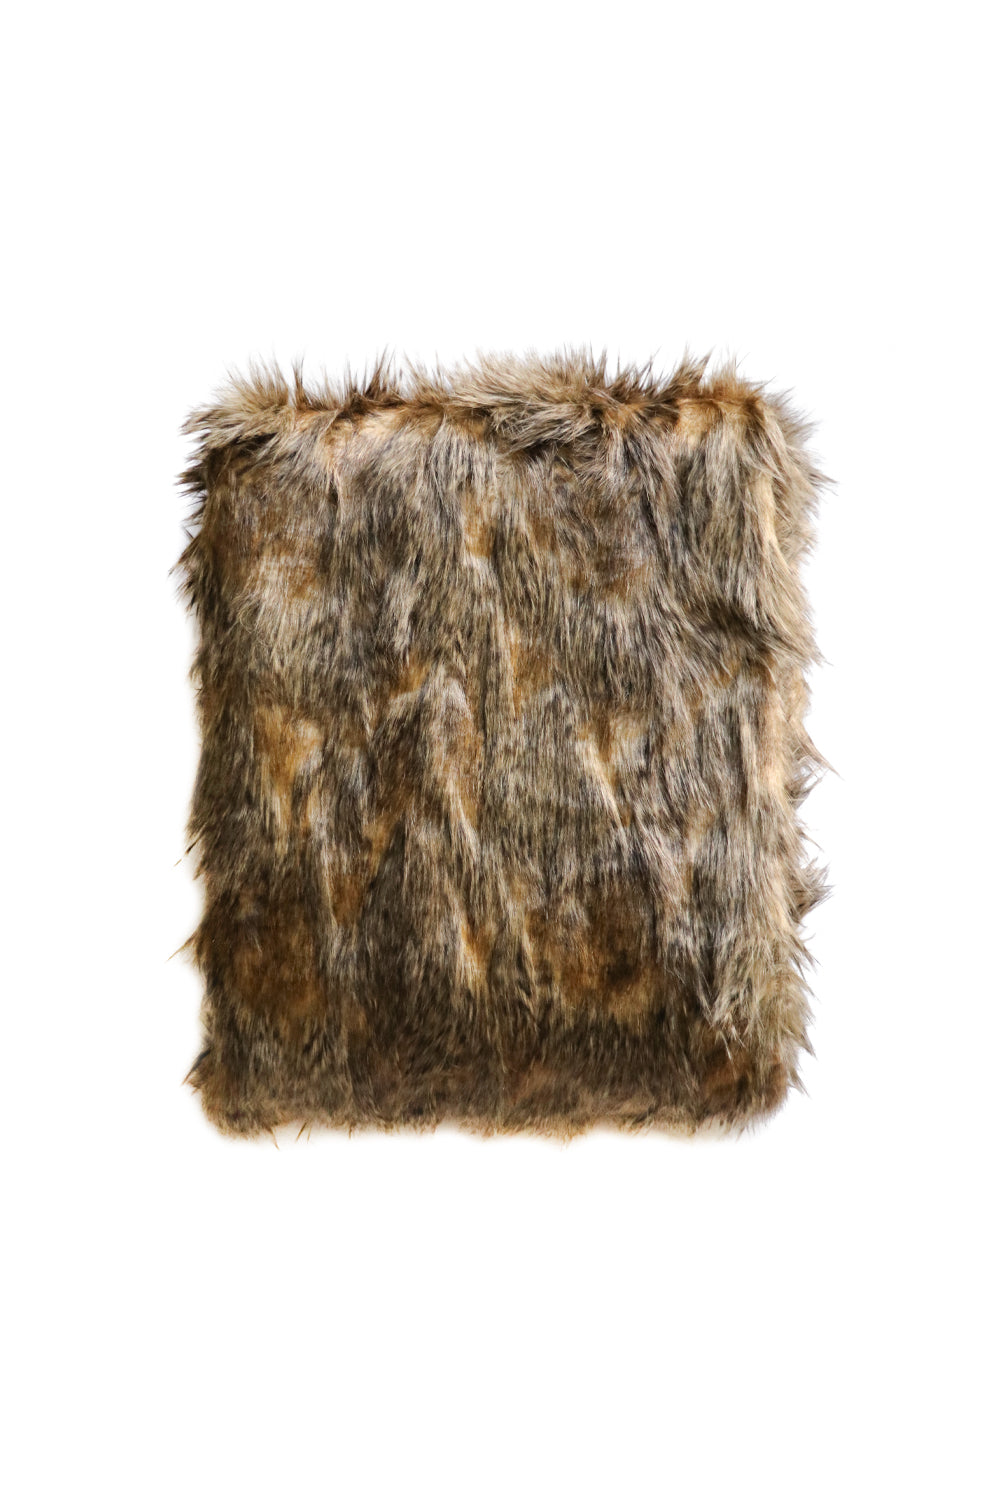 Red Fox imitation faux fur cushion and throw